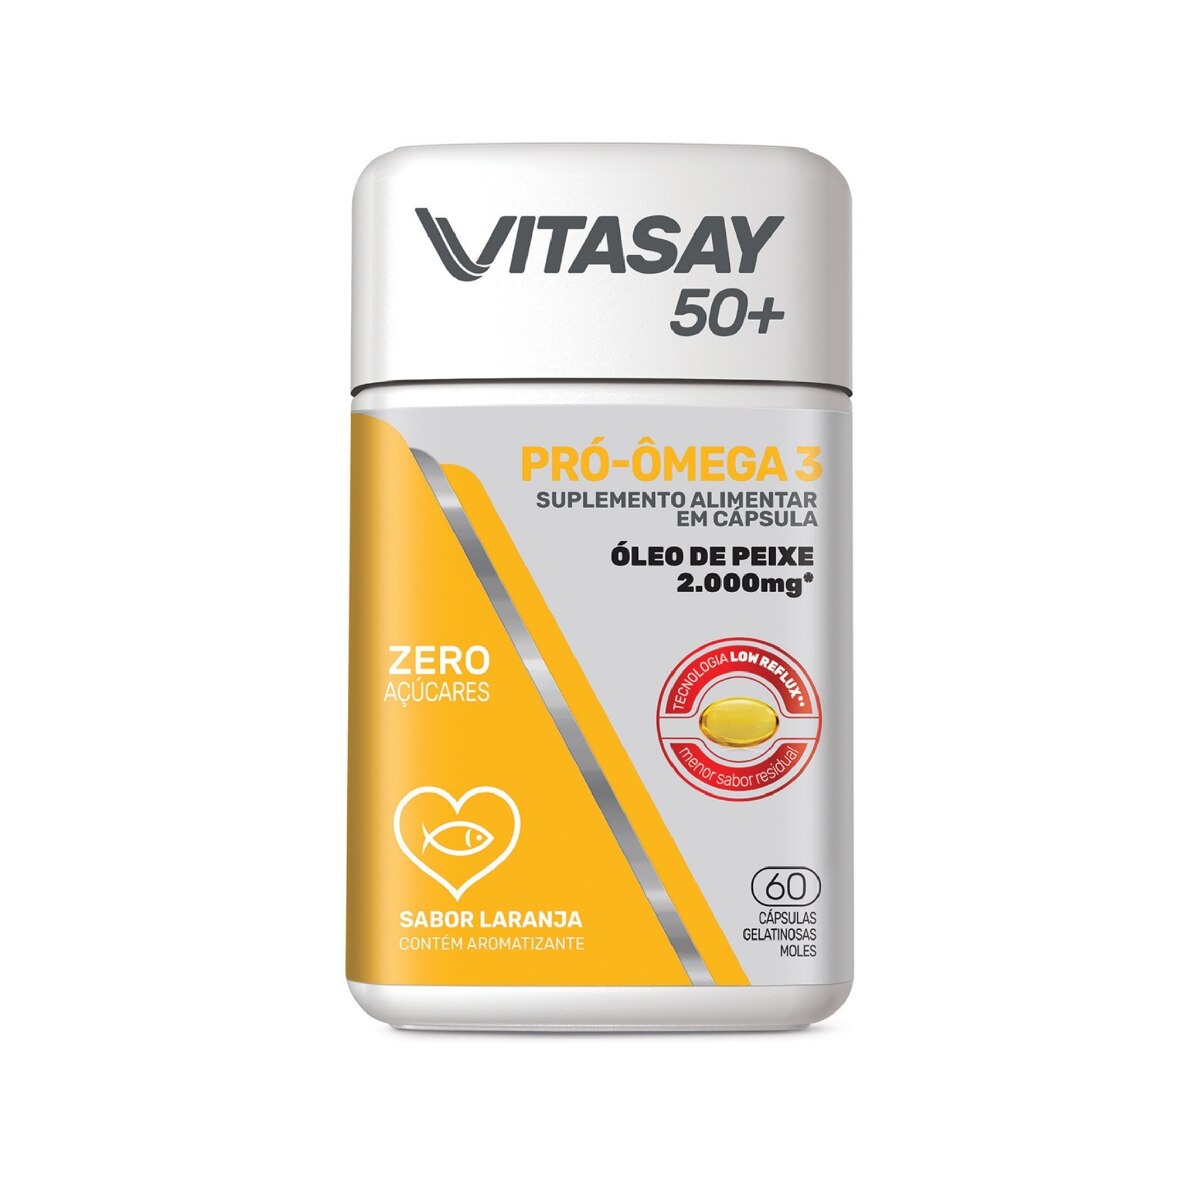 Vitasay 50+ Pro-Omega 3 60 Capsulas